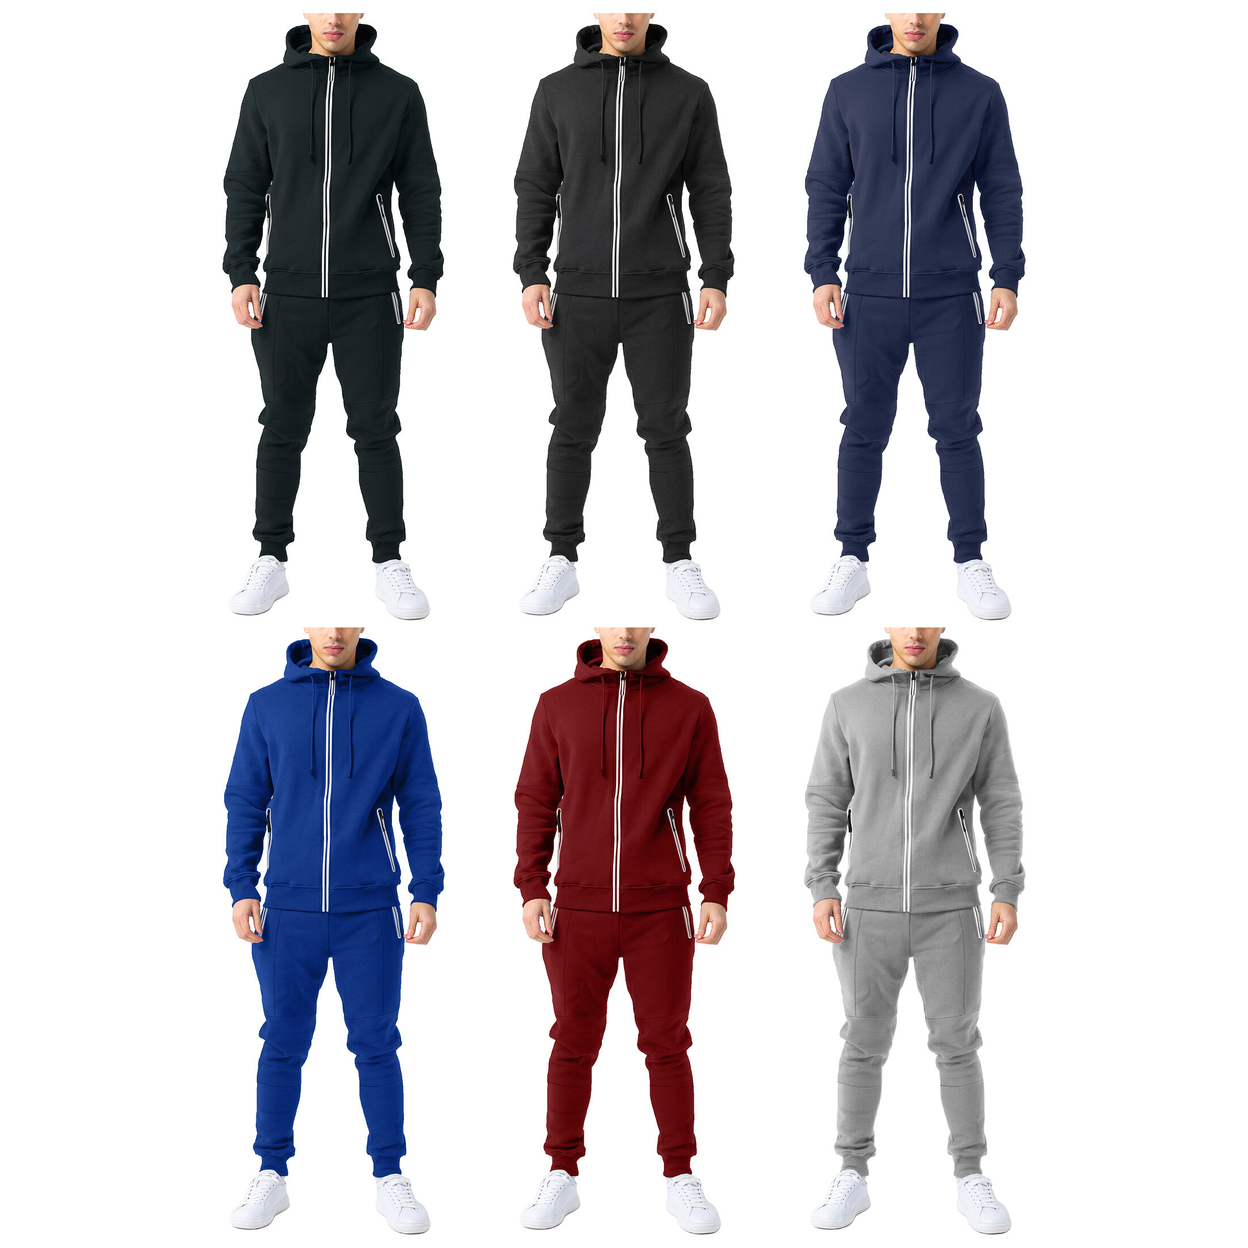 2-Pack: Men's Cozy Slim Fit Active Athletic Full Zip Hoodie And Jogger Tracksuit - Black & Blue, Medium